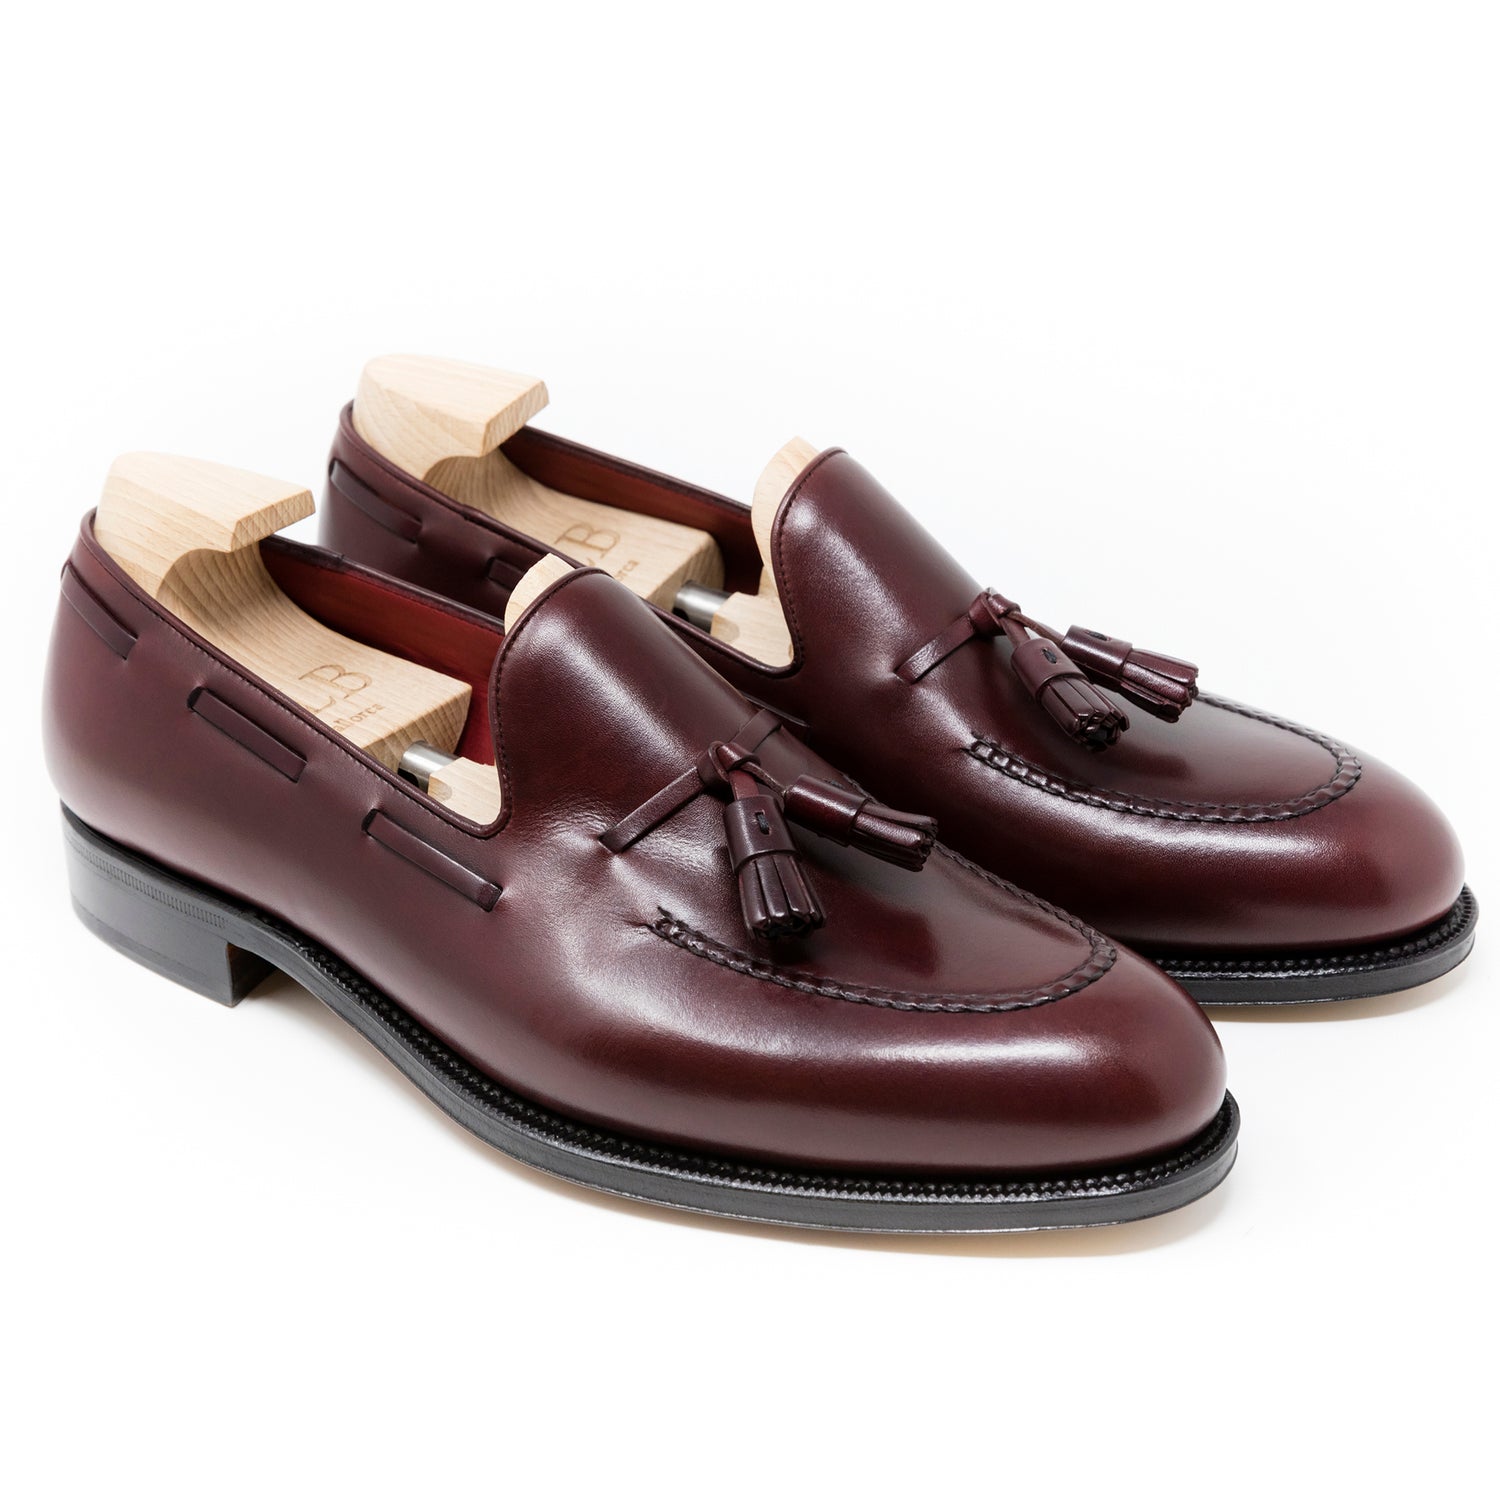 TLB Mallorca leather shoes 656 / JONES / VEGANO BURGUNDY